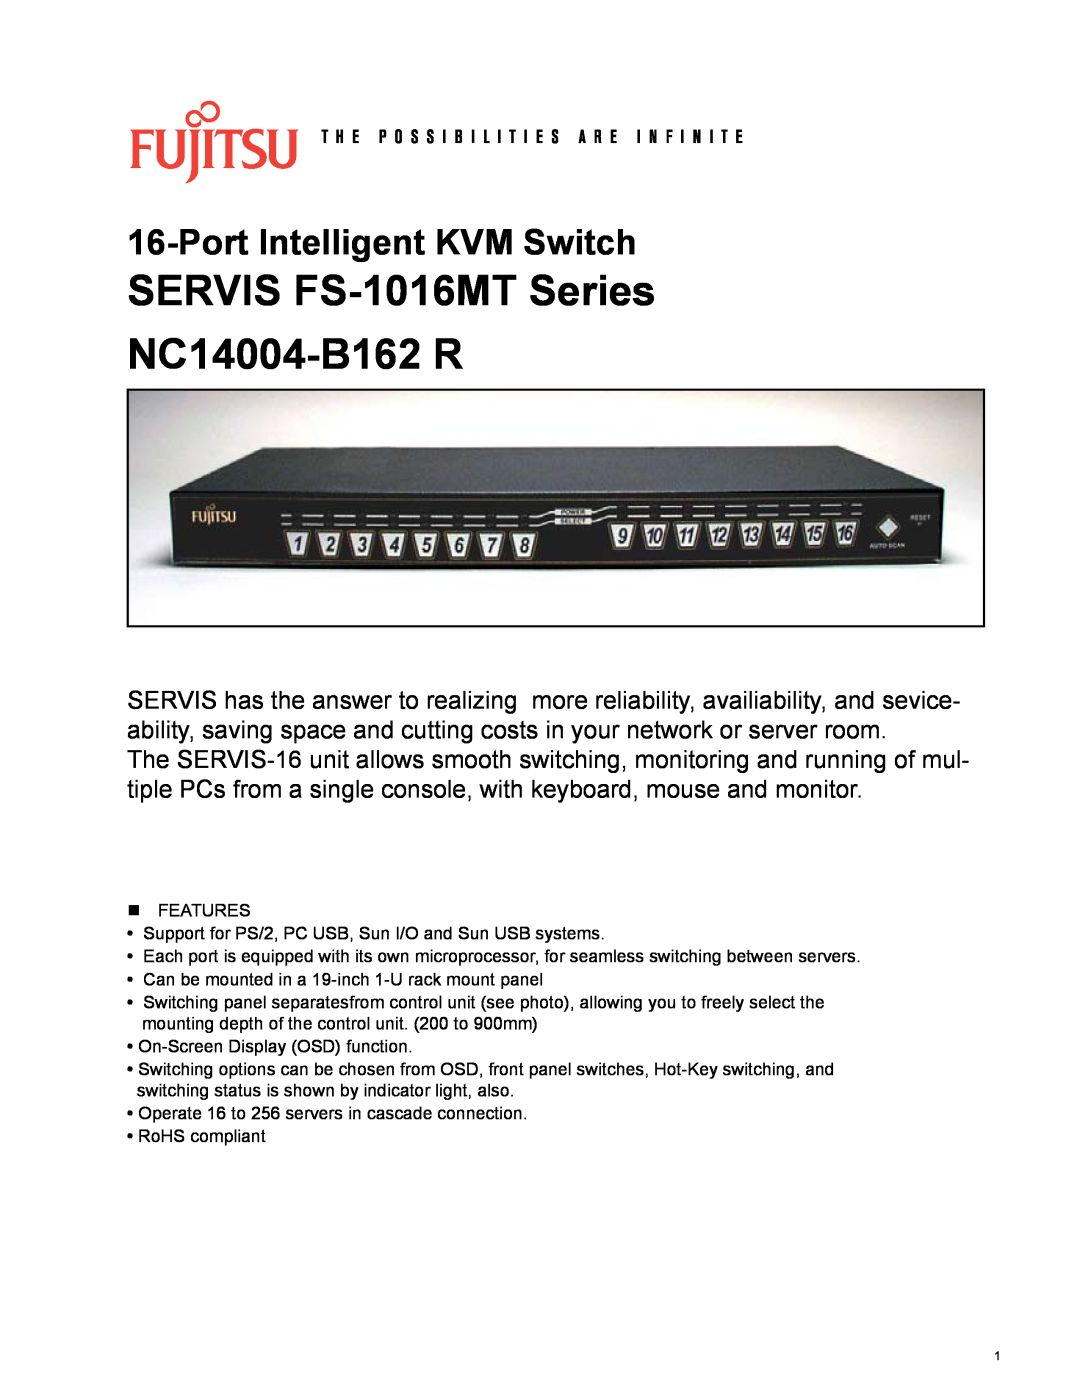 Fujitsu NC14004-B162 R manual SERVIS FS-1016MTSeries NC14004-B162R, PortIntelligent KVM Switch 